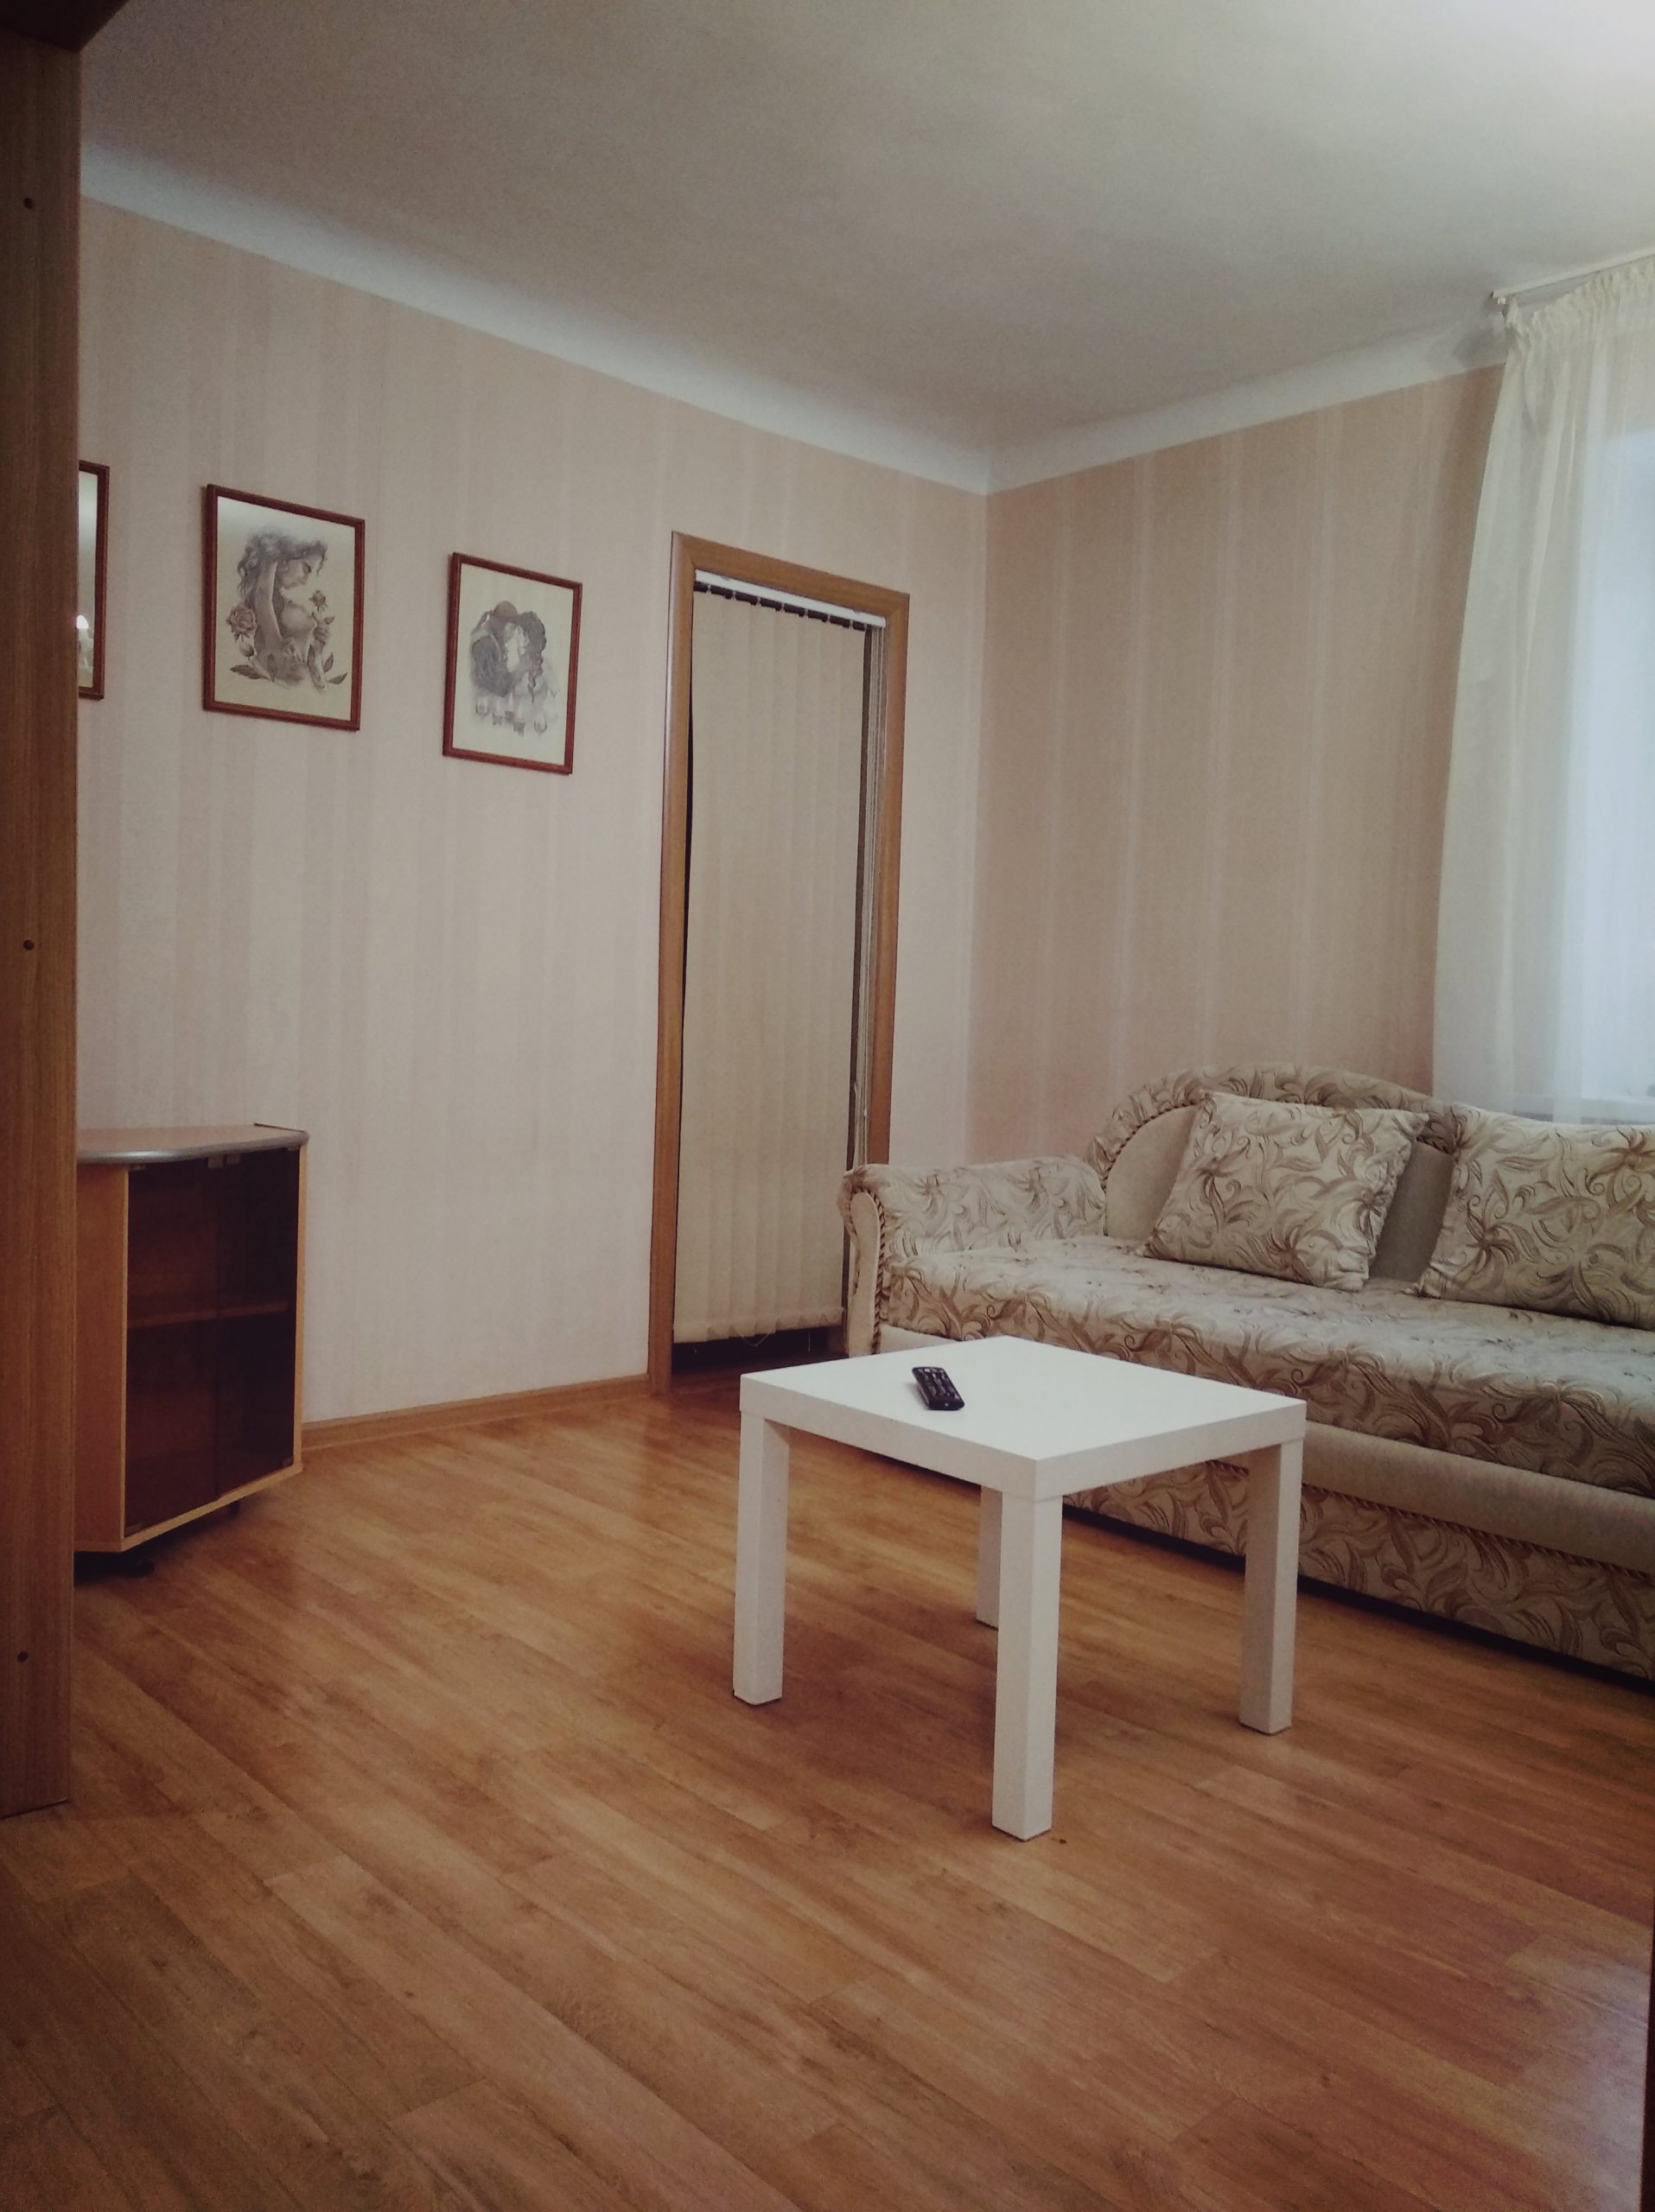 Однокомнатная квартира на проспекте Ленина 22 (35кв.м)до 2 гостей